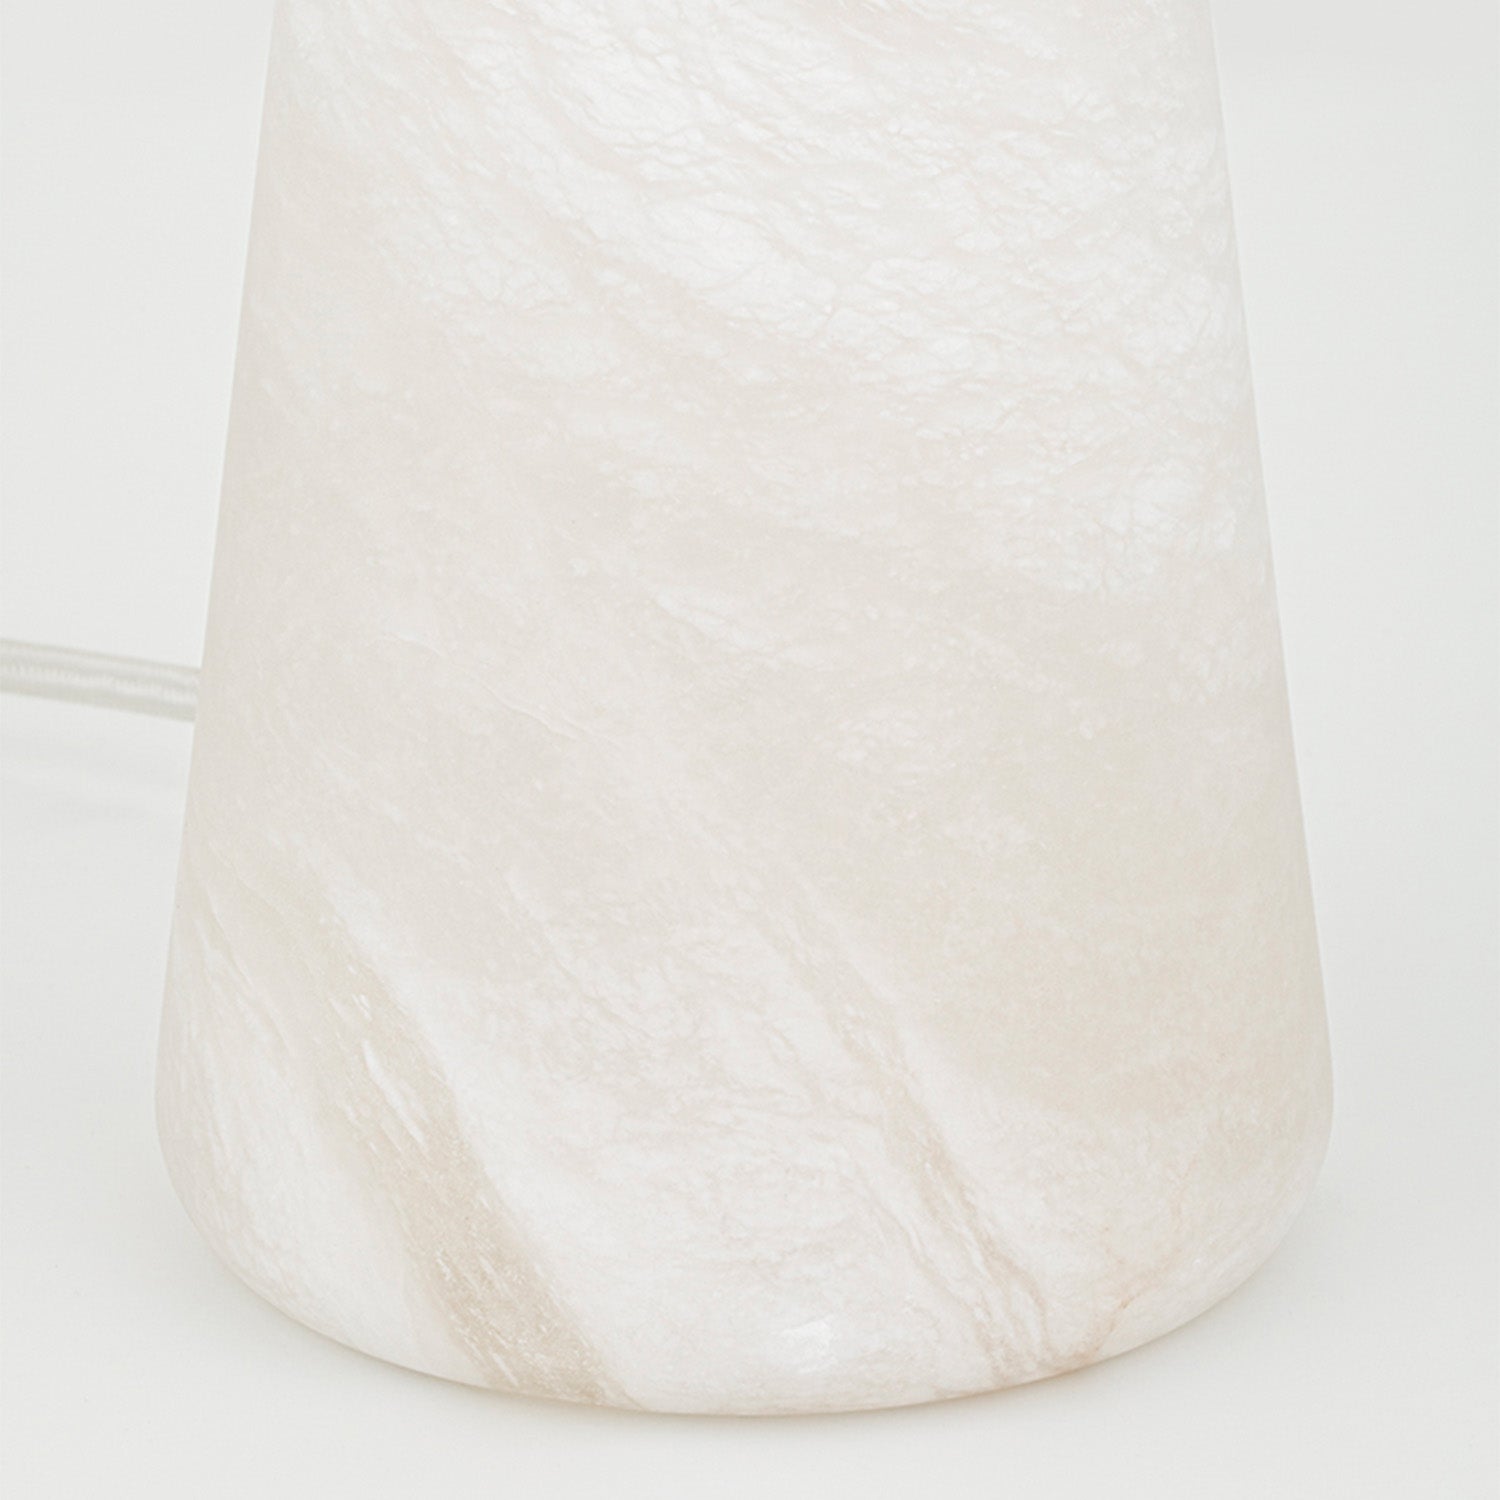 MONTGOMERY - White Haussmann Marble Bedside Lamp